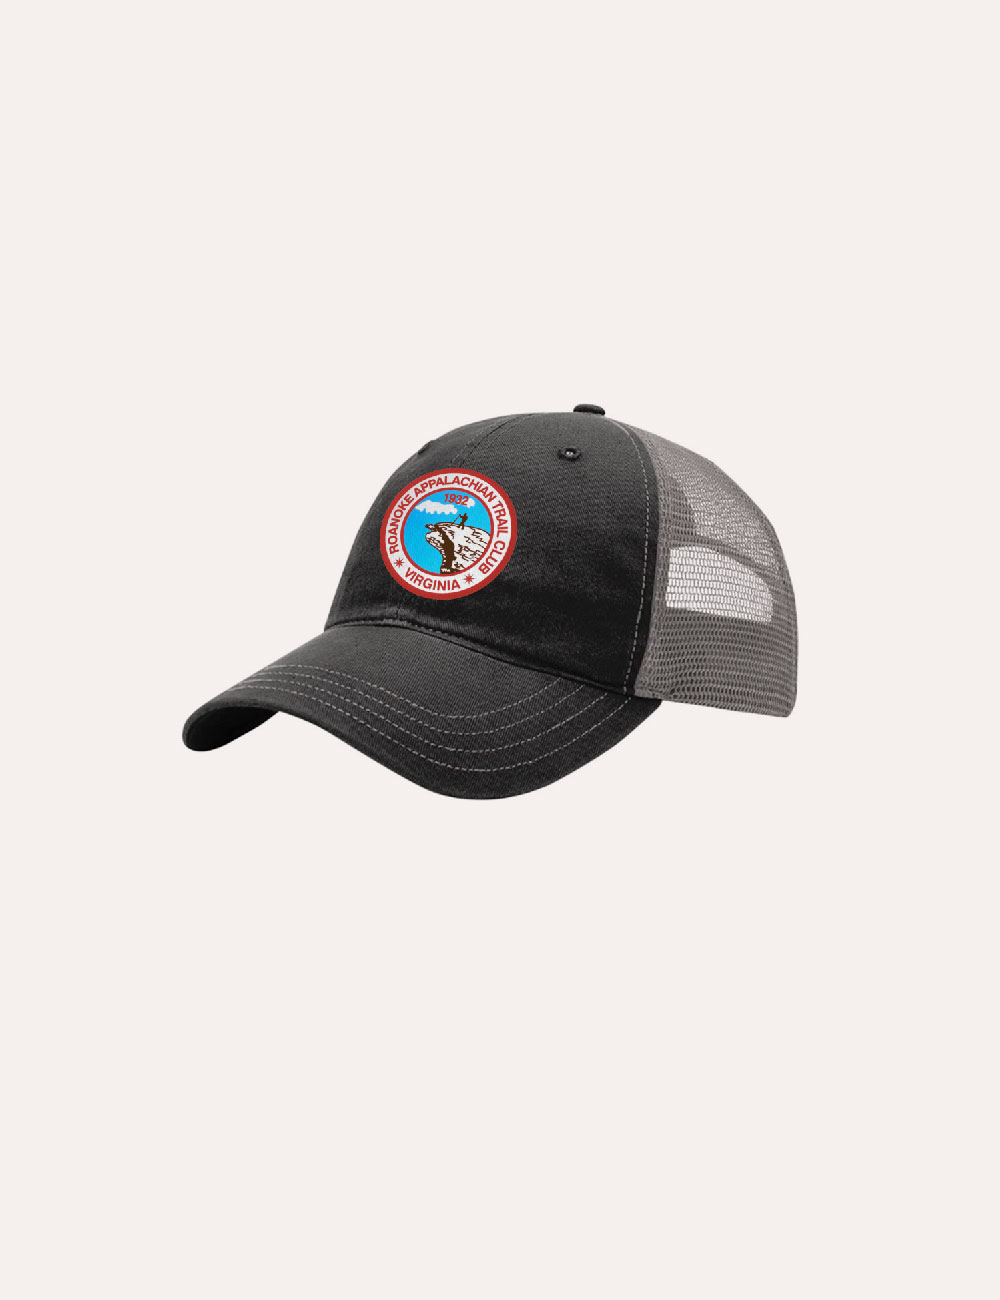 Roanoke Appalachian Trail Club - Merch - Soft Mesh Black & Gray Trucker Hat